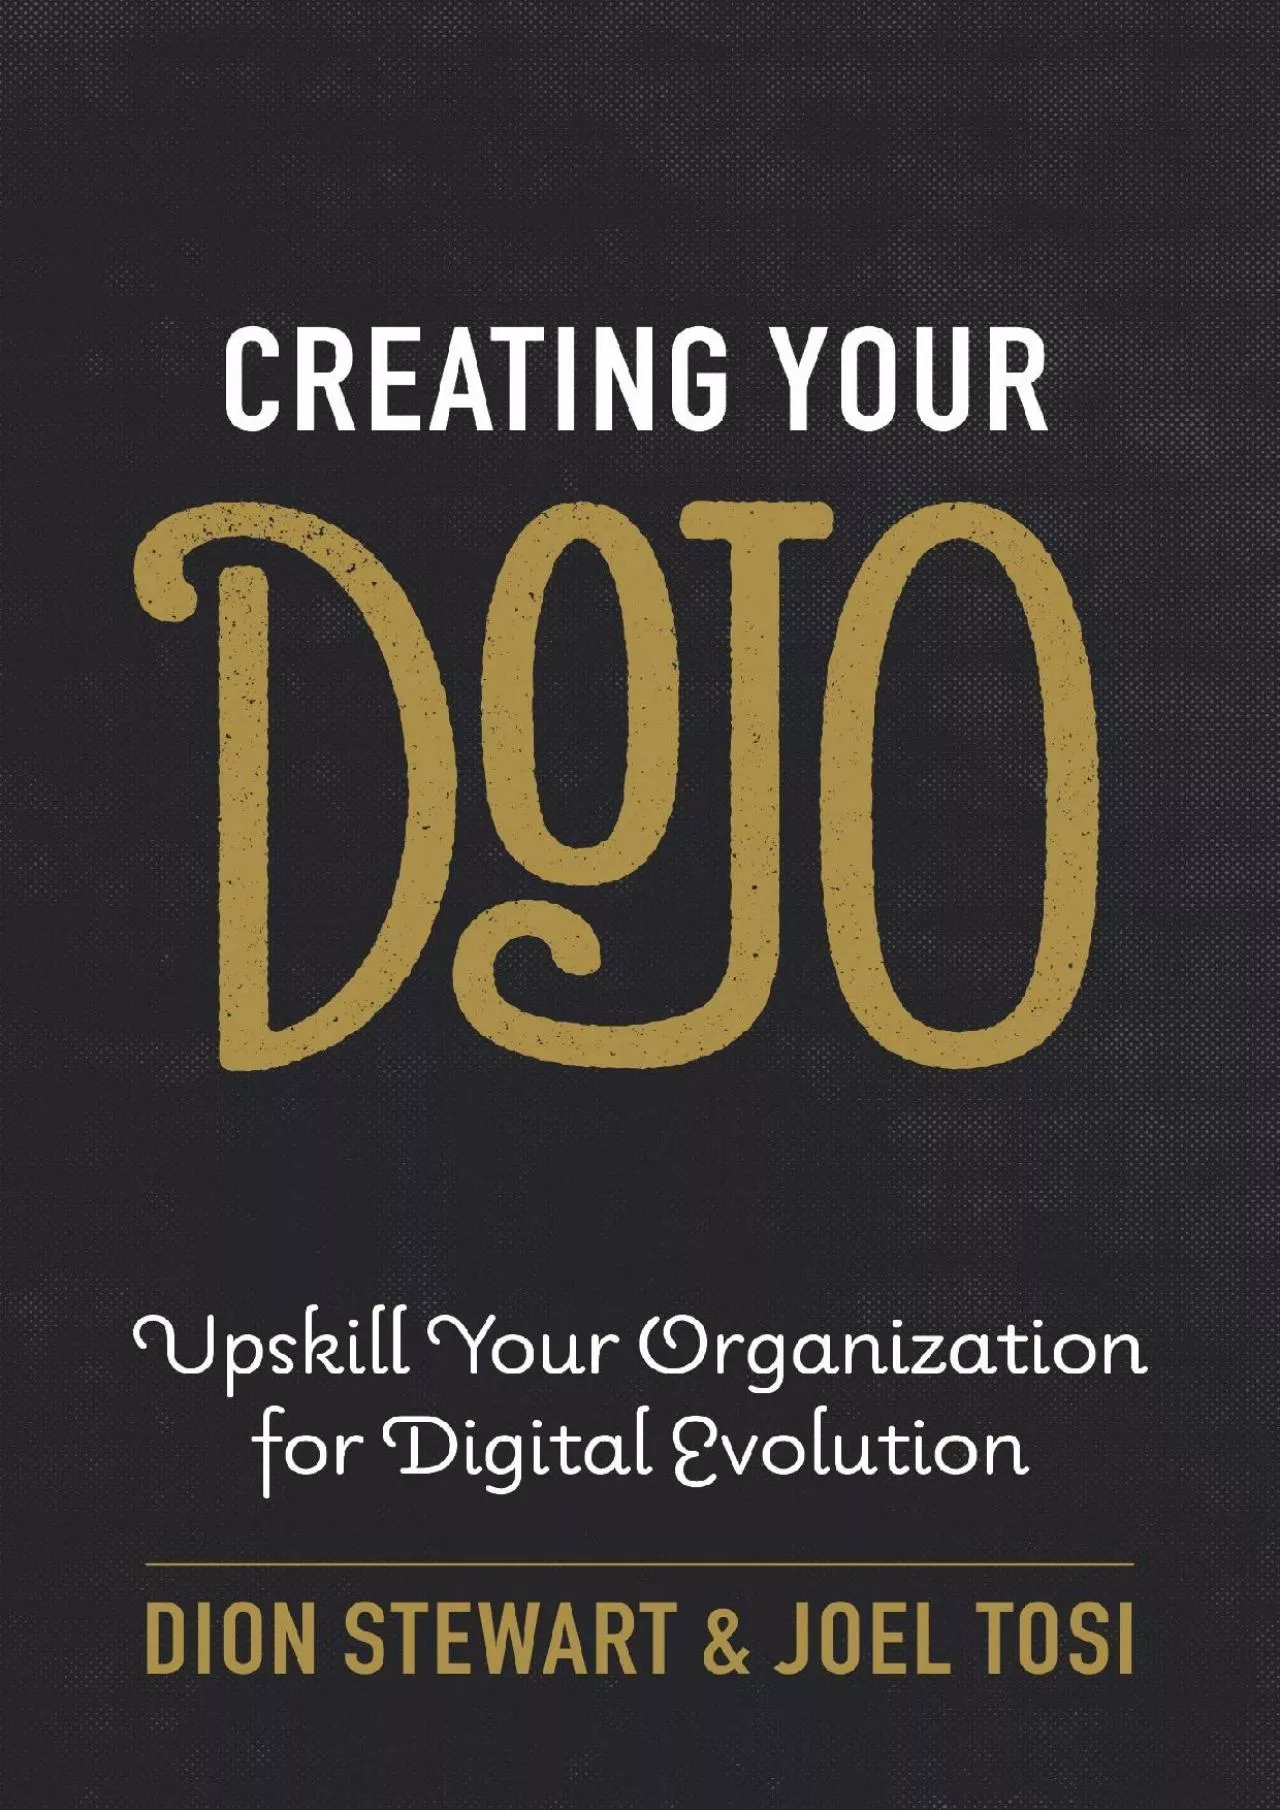 (DOWNLOAD)-Creating Your Dojo: Upskill Your Organization for Digital Evolution